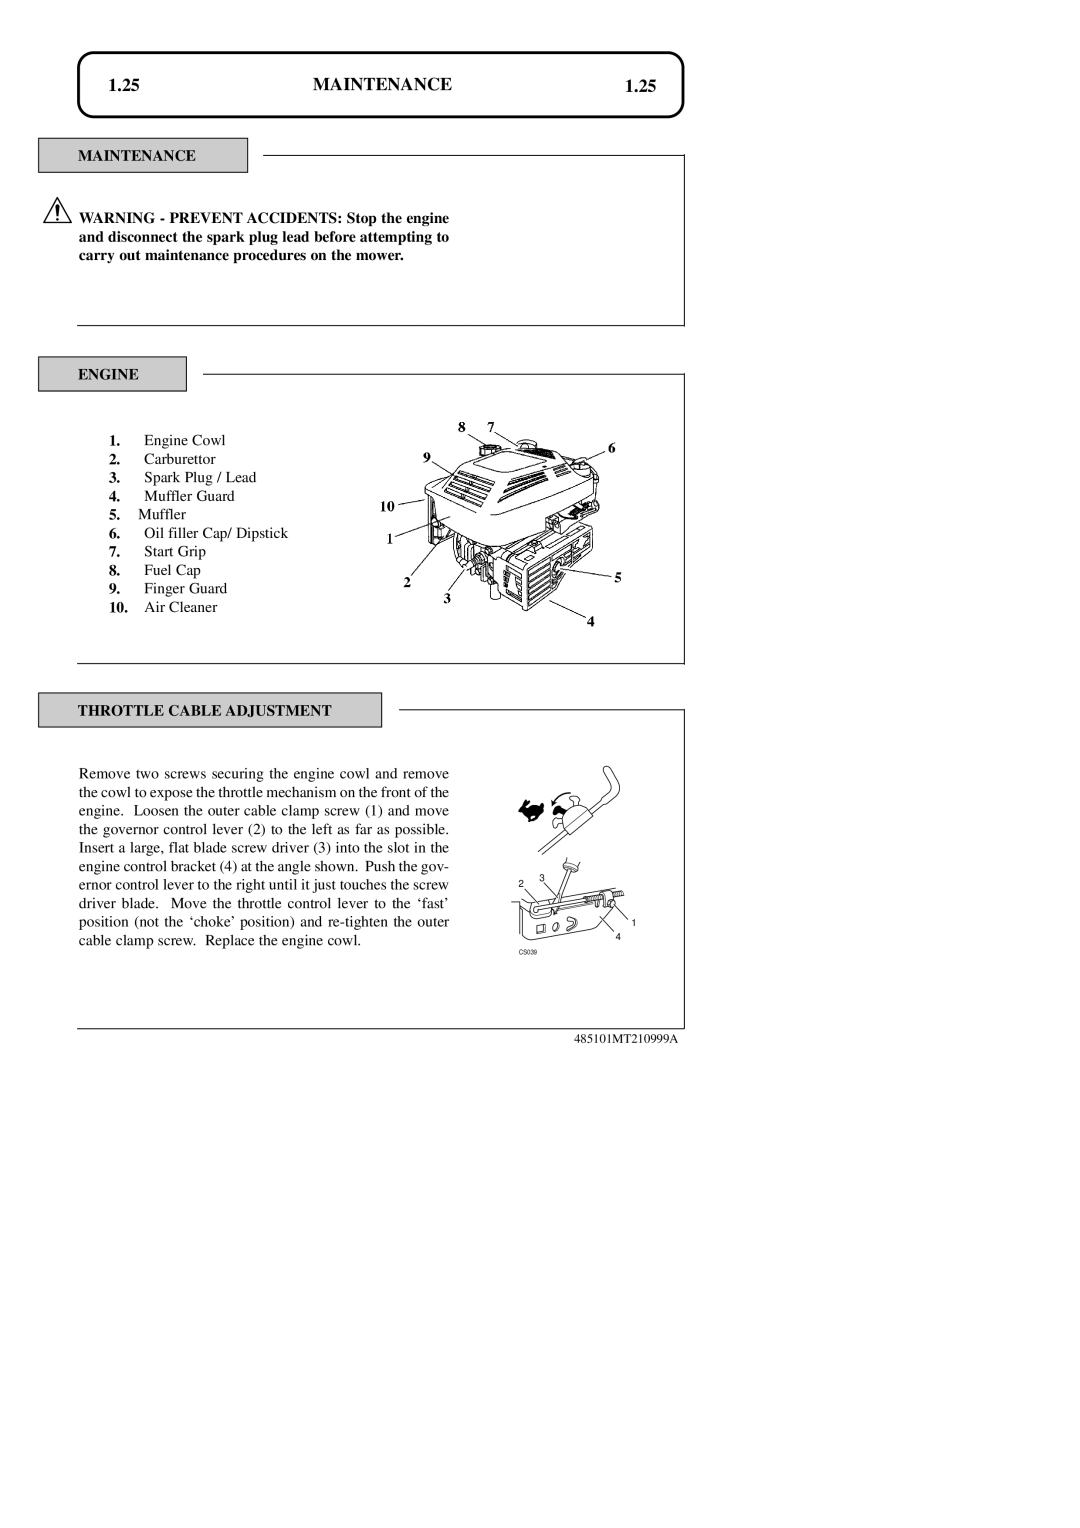 Hayter Mowers 48ST manual 1.25, Maintenance, Engine Cowl 2. Carburettor 3. Spark Plug / Lead 4. Muffler Guard, CS039 